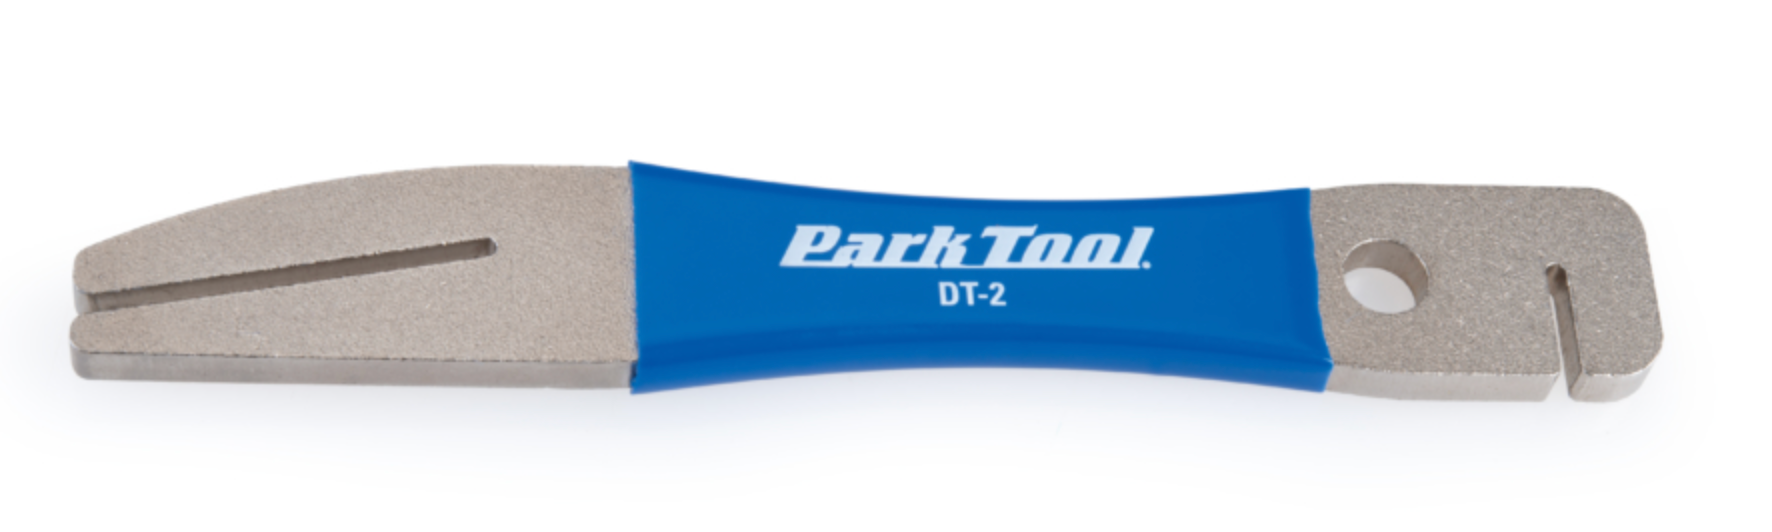 Park Tool DT-2